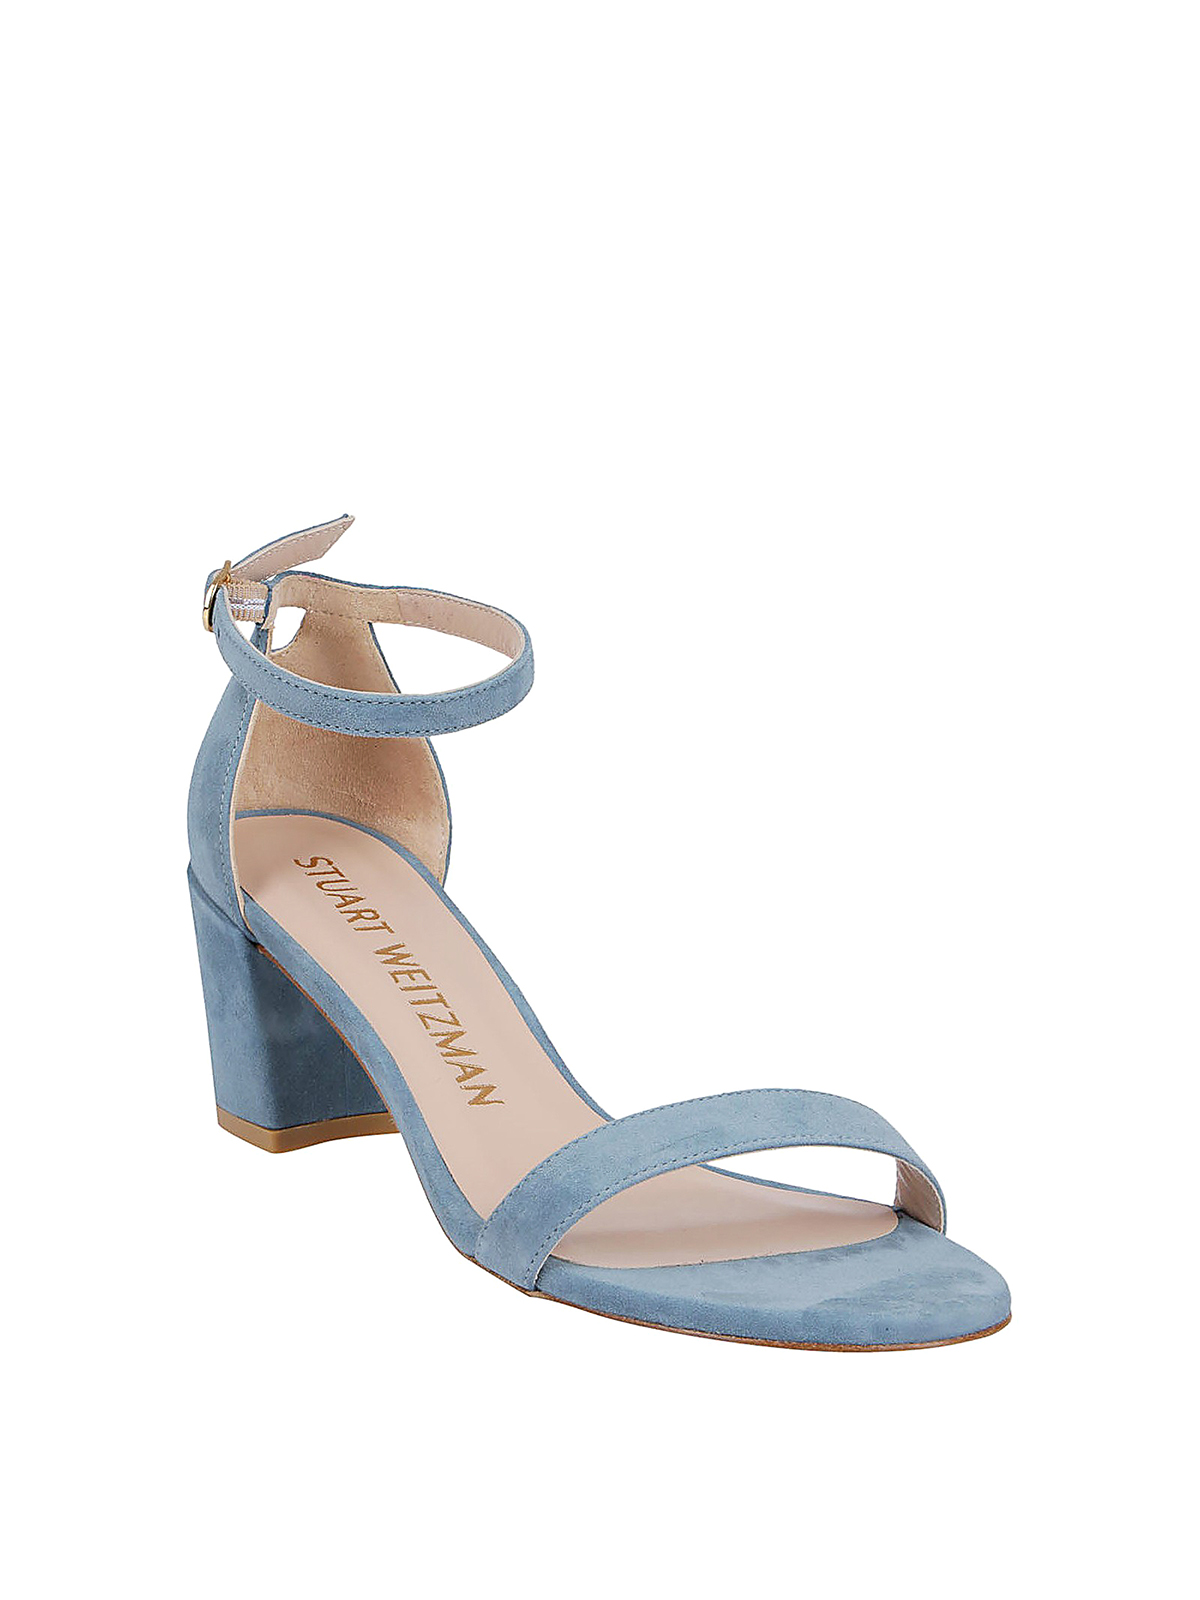 Simple light blue suede sandals 